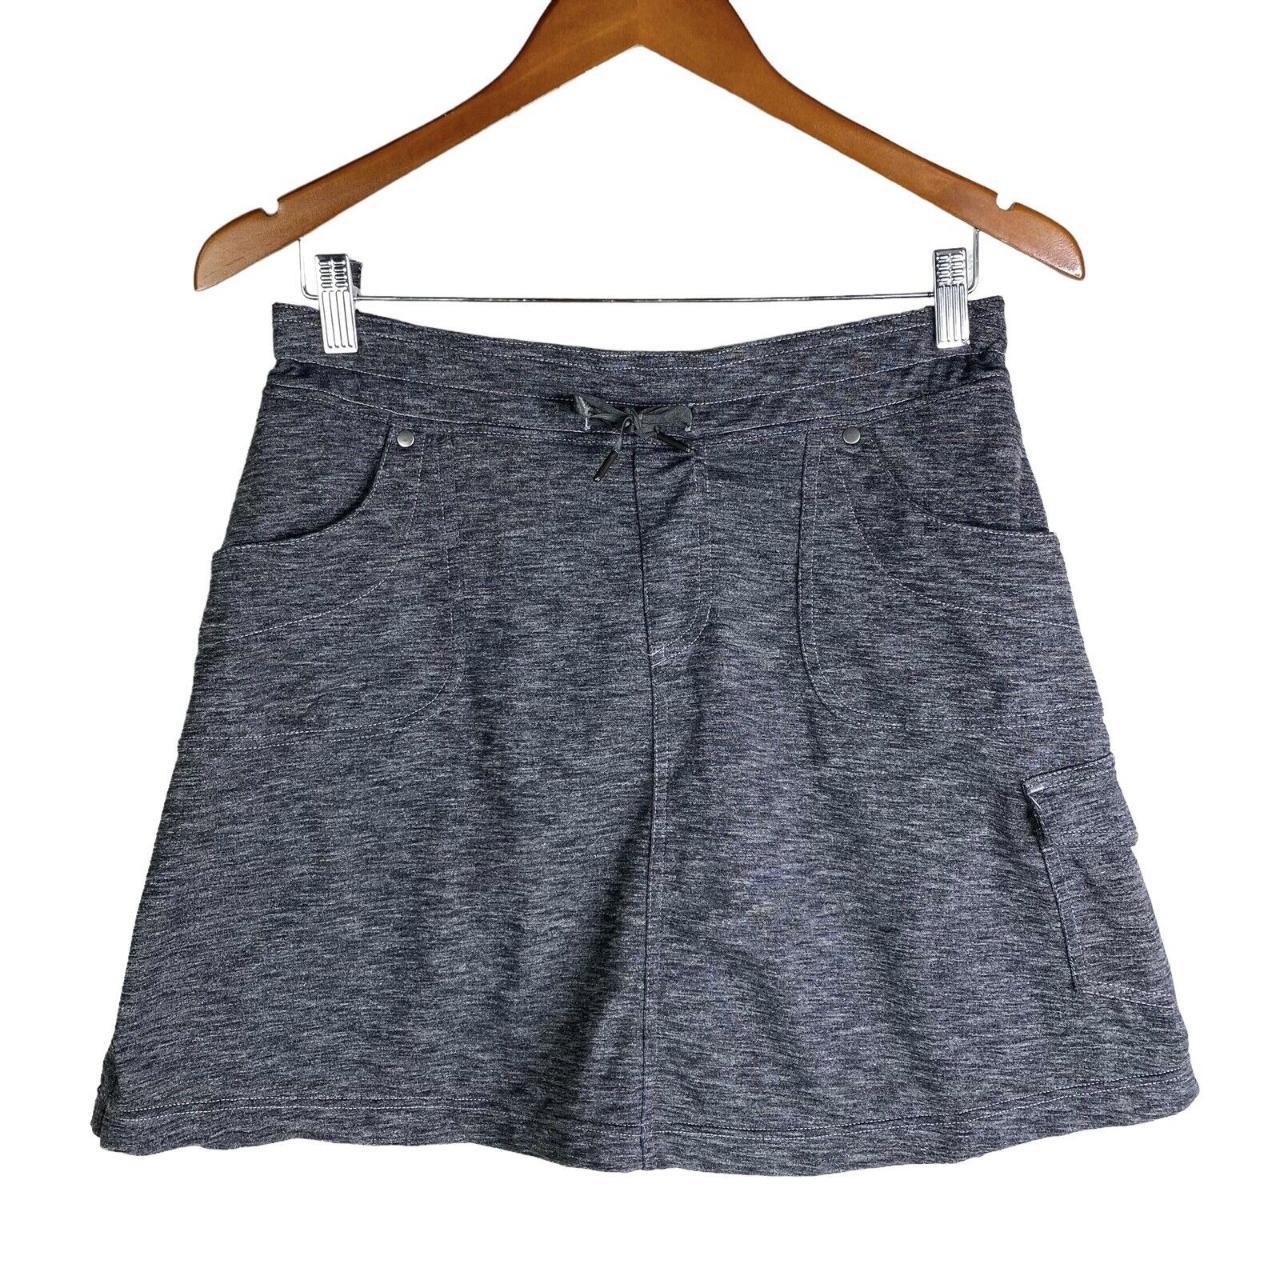 KÜHL Women's Grey Skirt